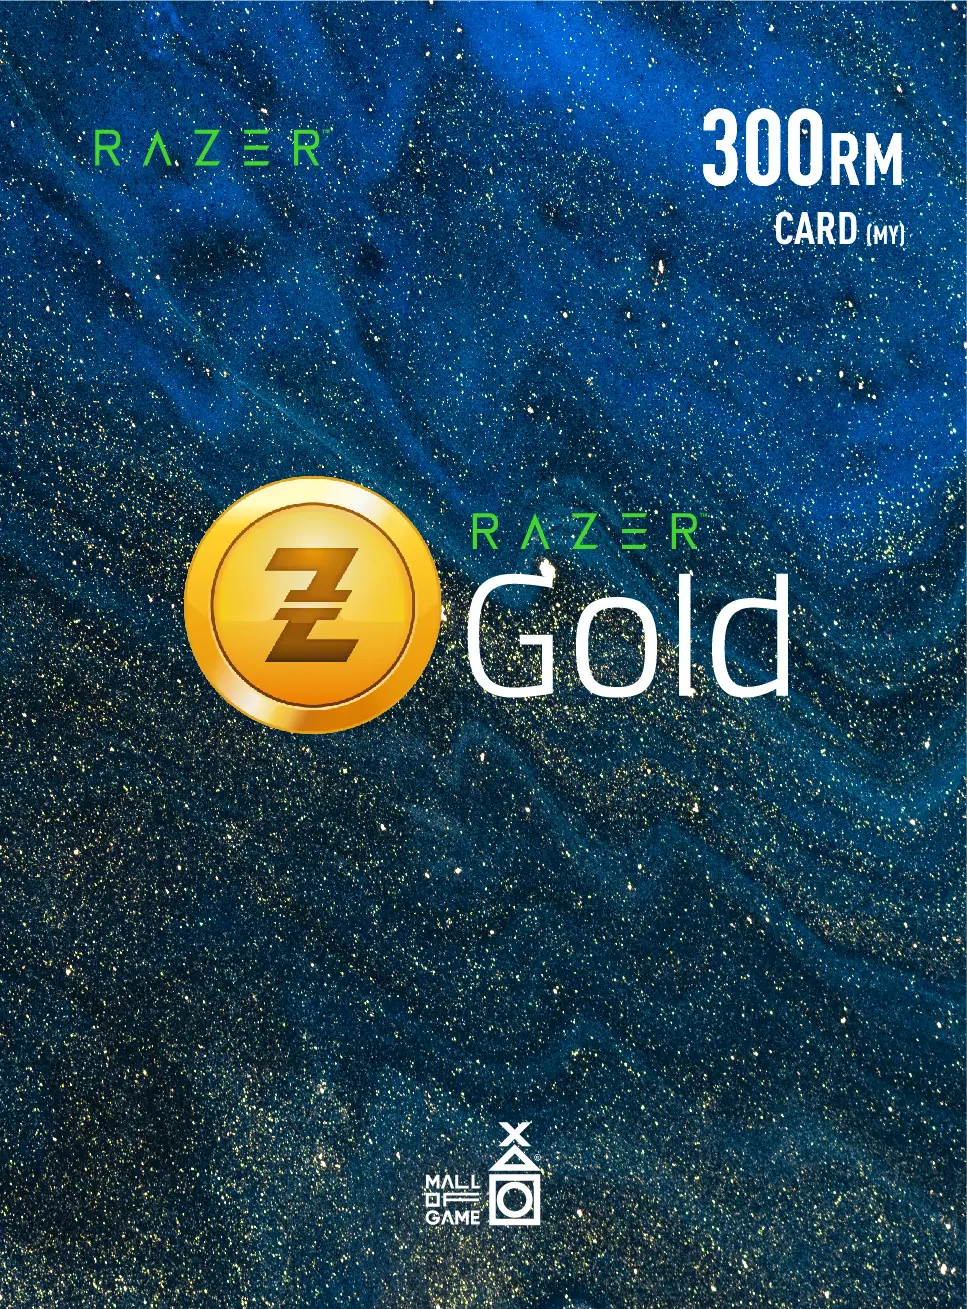 Razer Gold RM300 (MY)